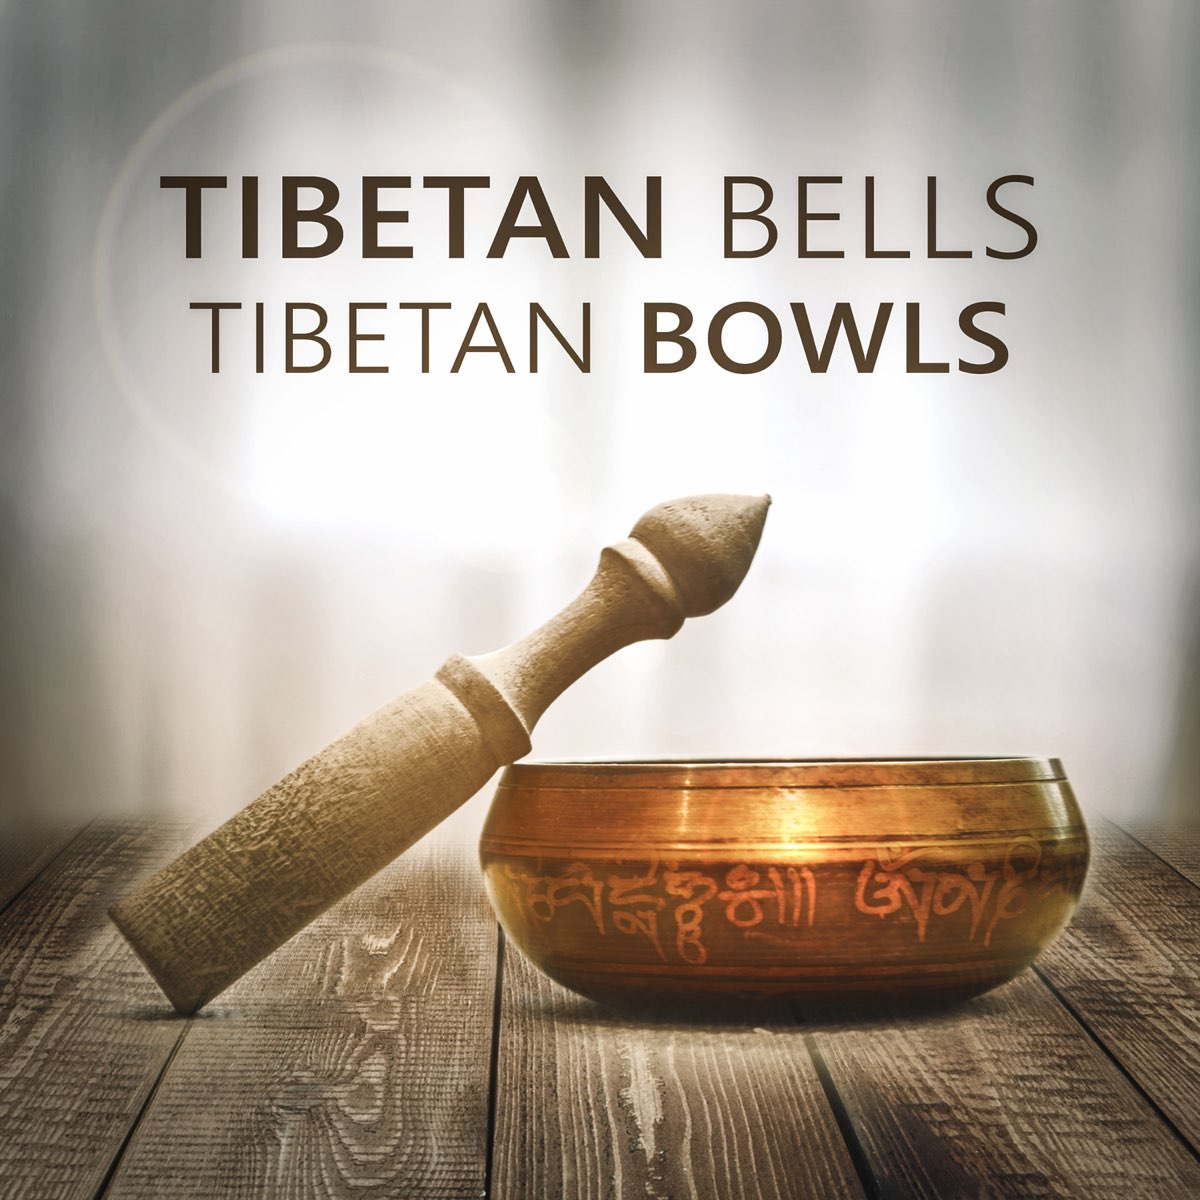 Tibetan Bells, Tibetan Bowls: Tranquility, Gong Bath Sound, Buddhist  Wisdom, Serenity Asian Meditation, Zen Garden Tao Music - Album by  Wellbeing Zone - Apple Music